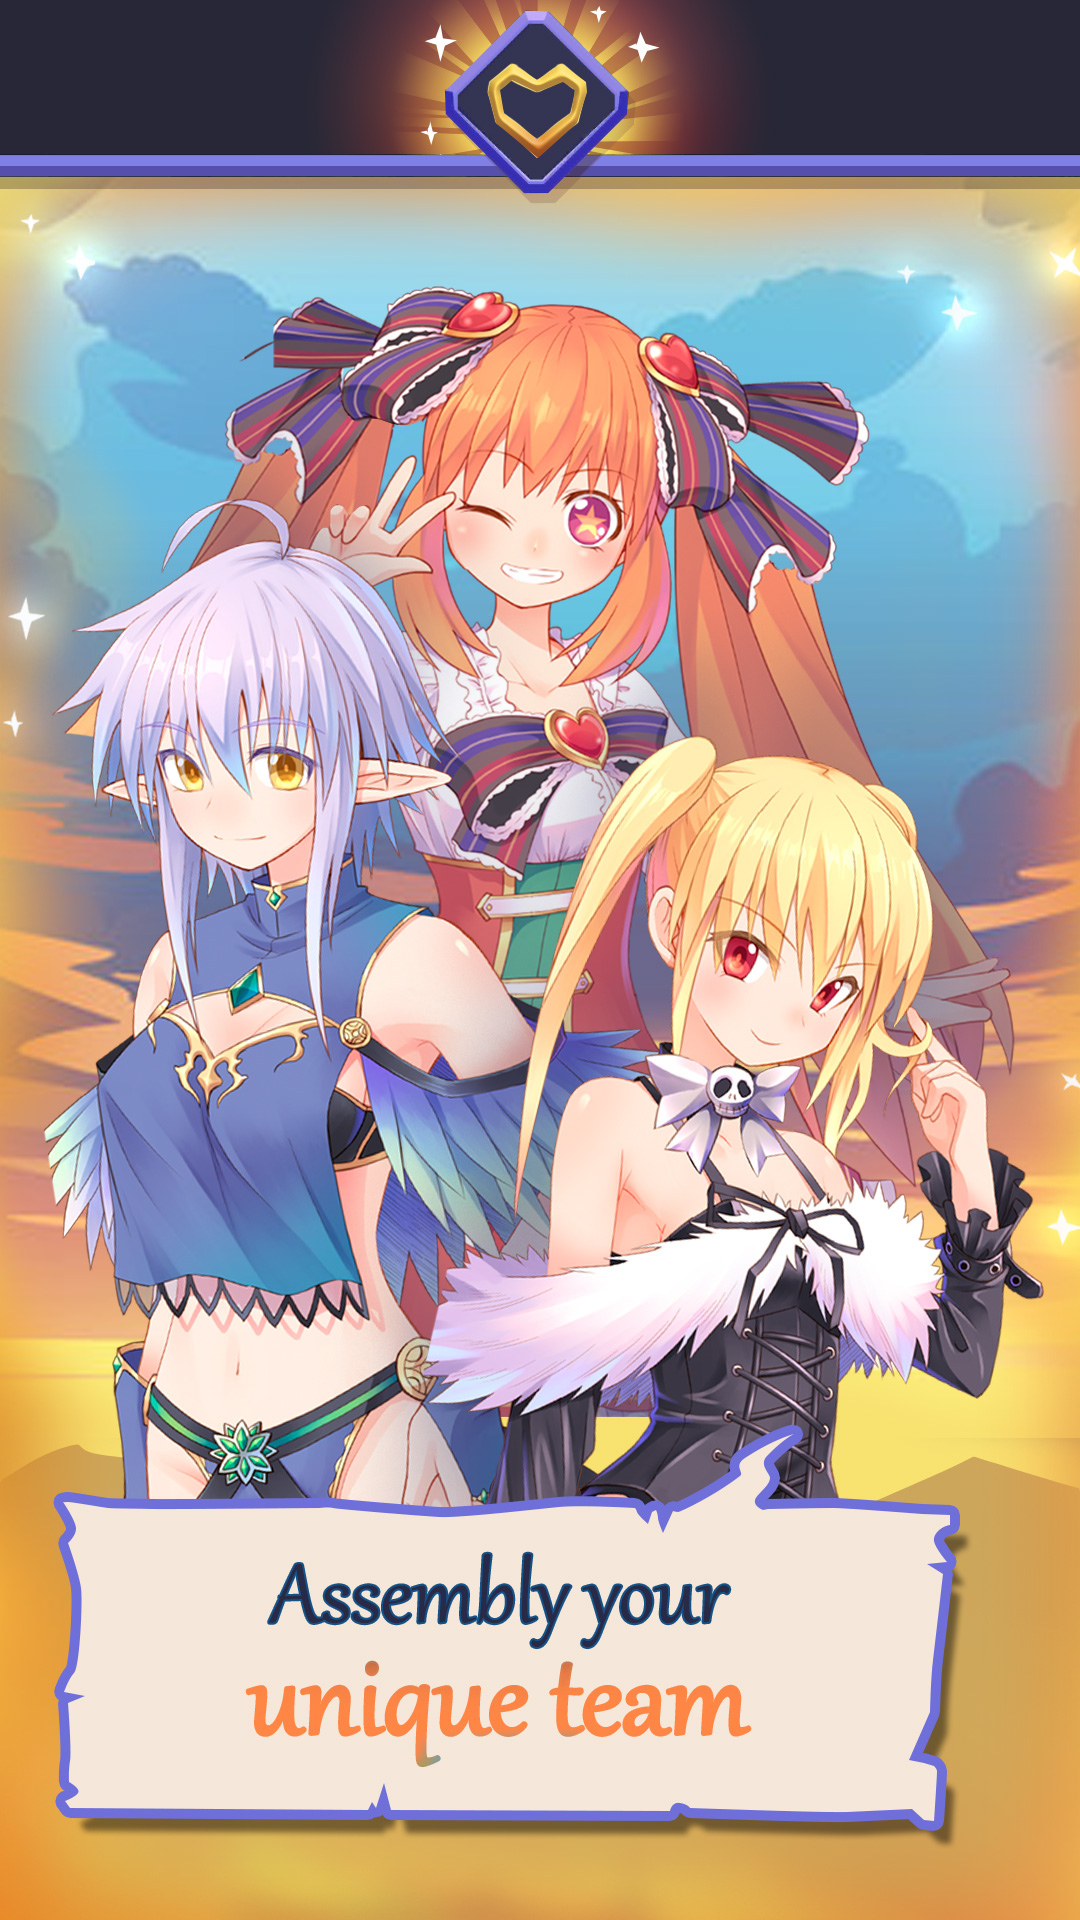 Descargar Fantasy town: Anime girls story gratis para Android.